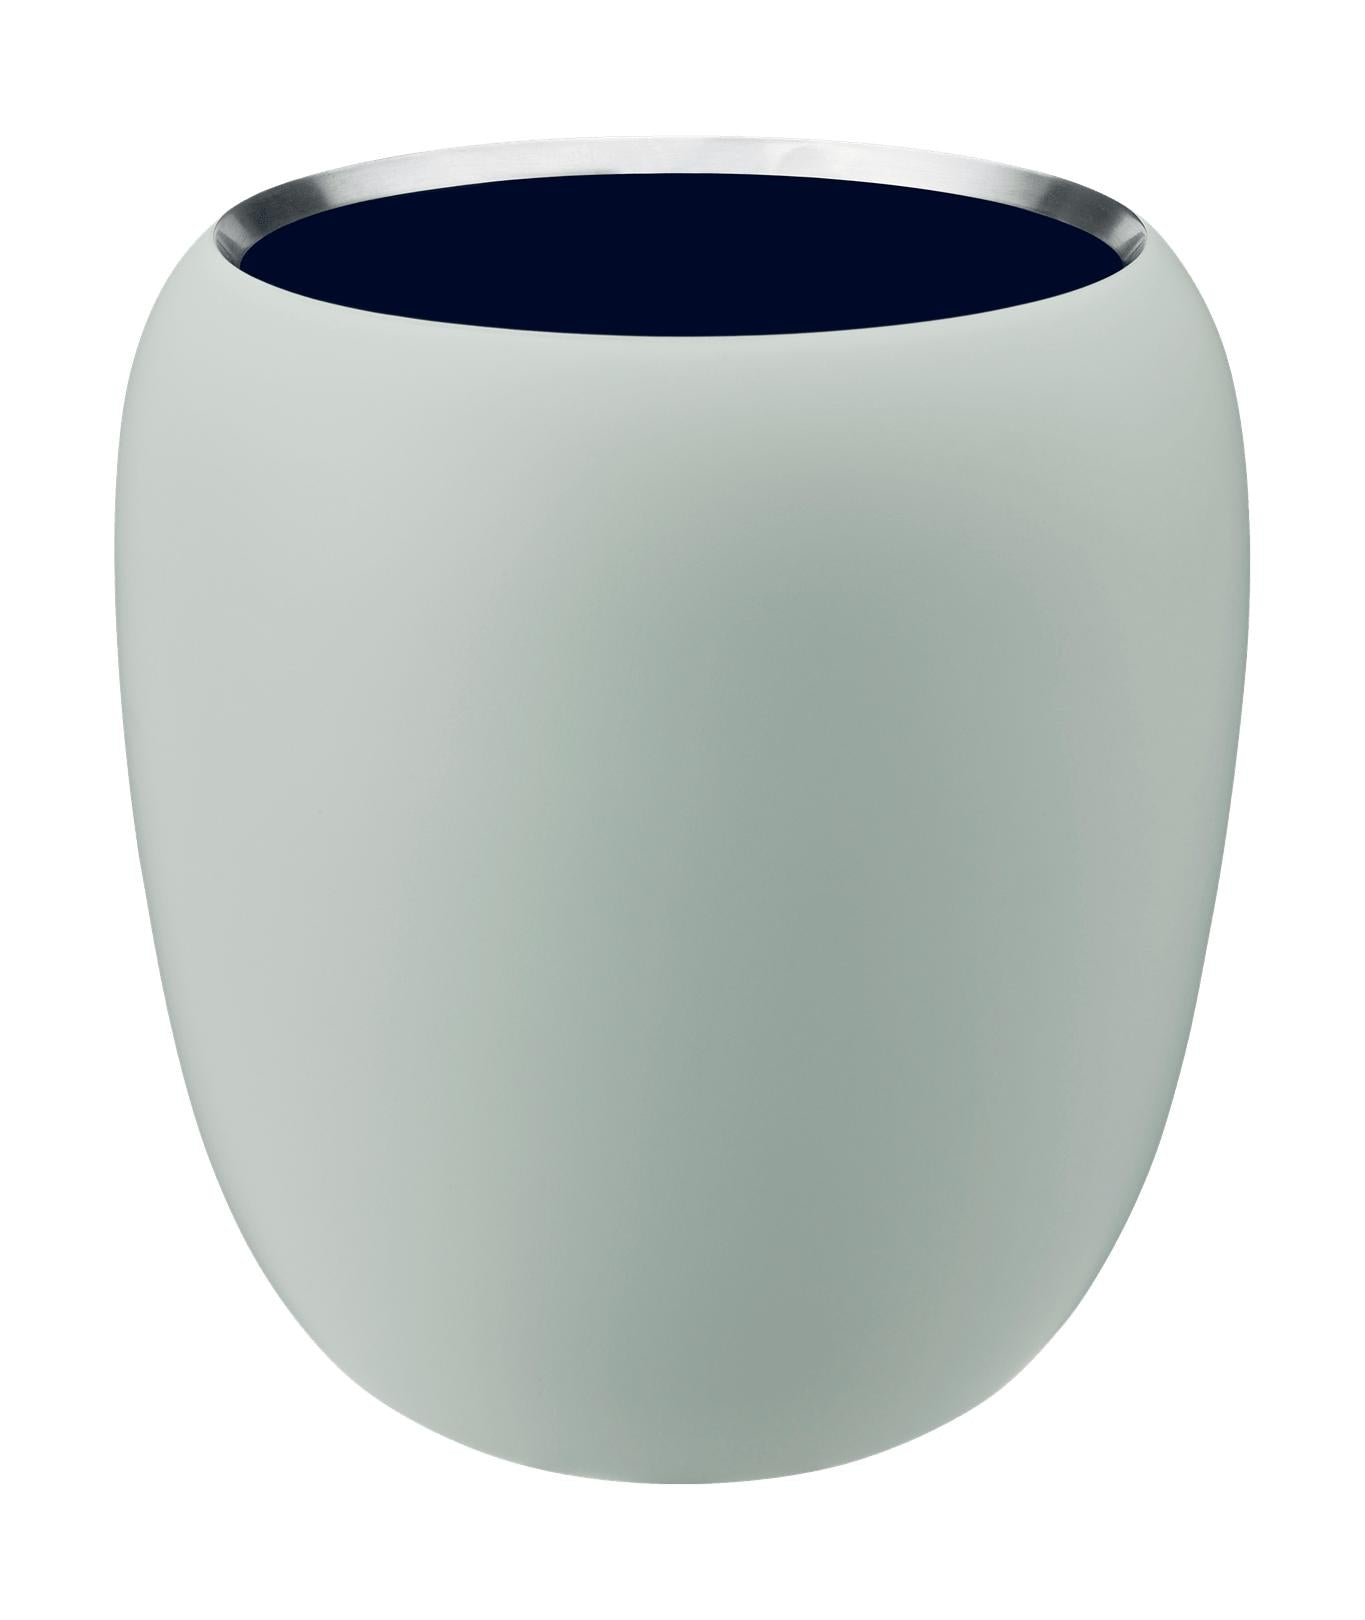 Vase Stelton Ora 21,6 cm, menthe néo